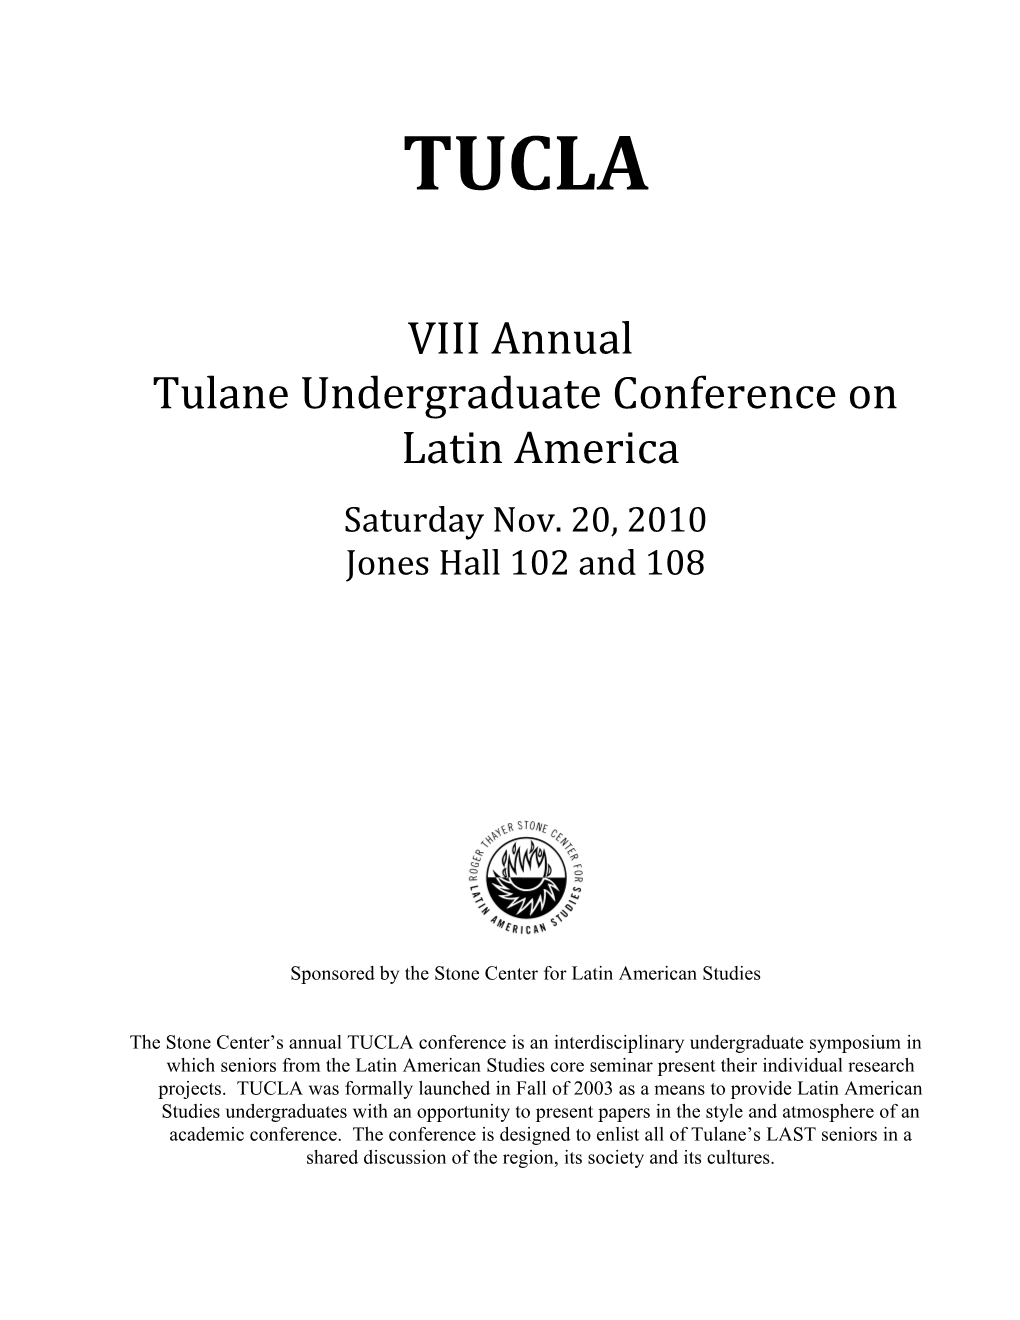 Tulane Undergraduate Conference on Latin America